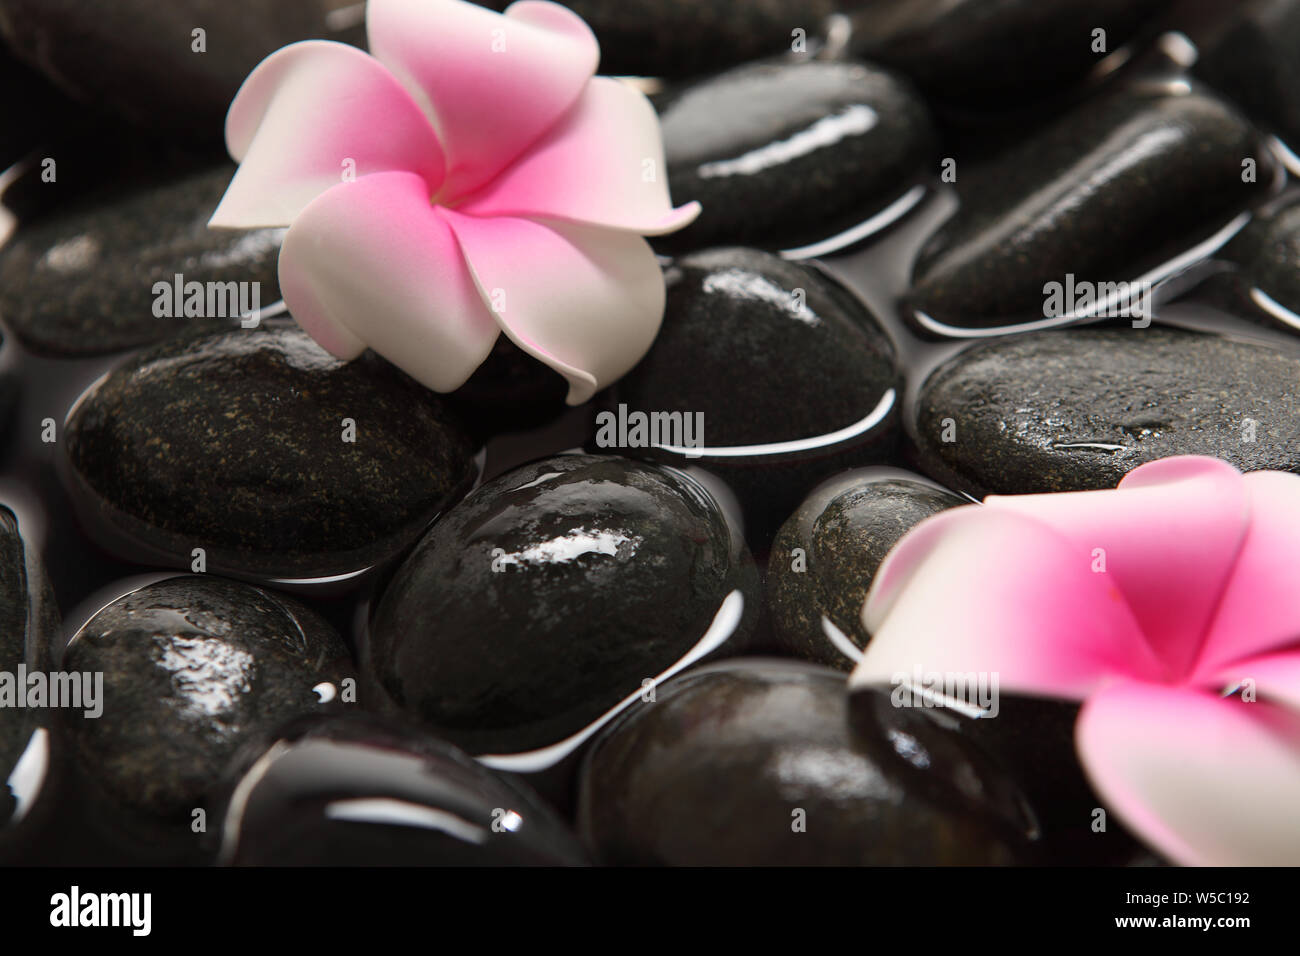 Flower with lastone therapy stones Stock Photo